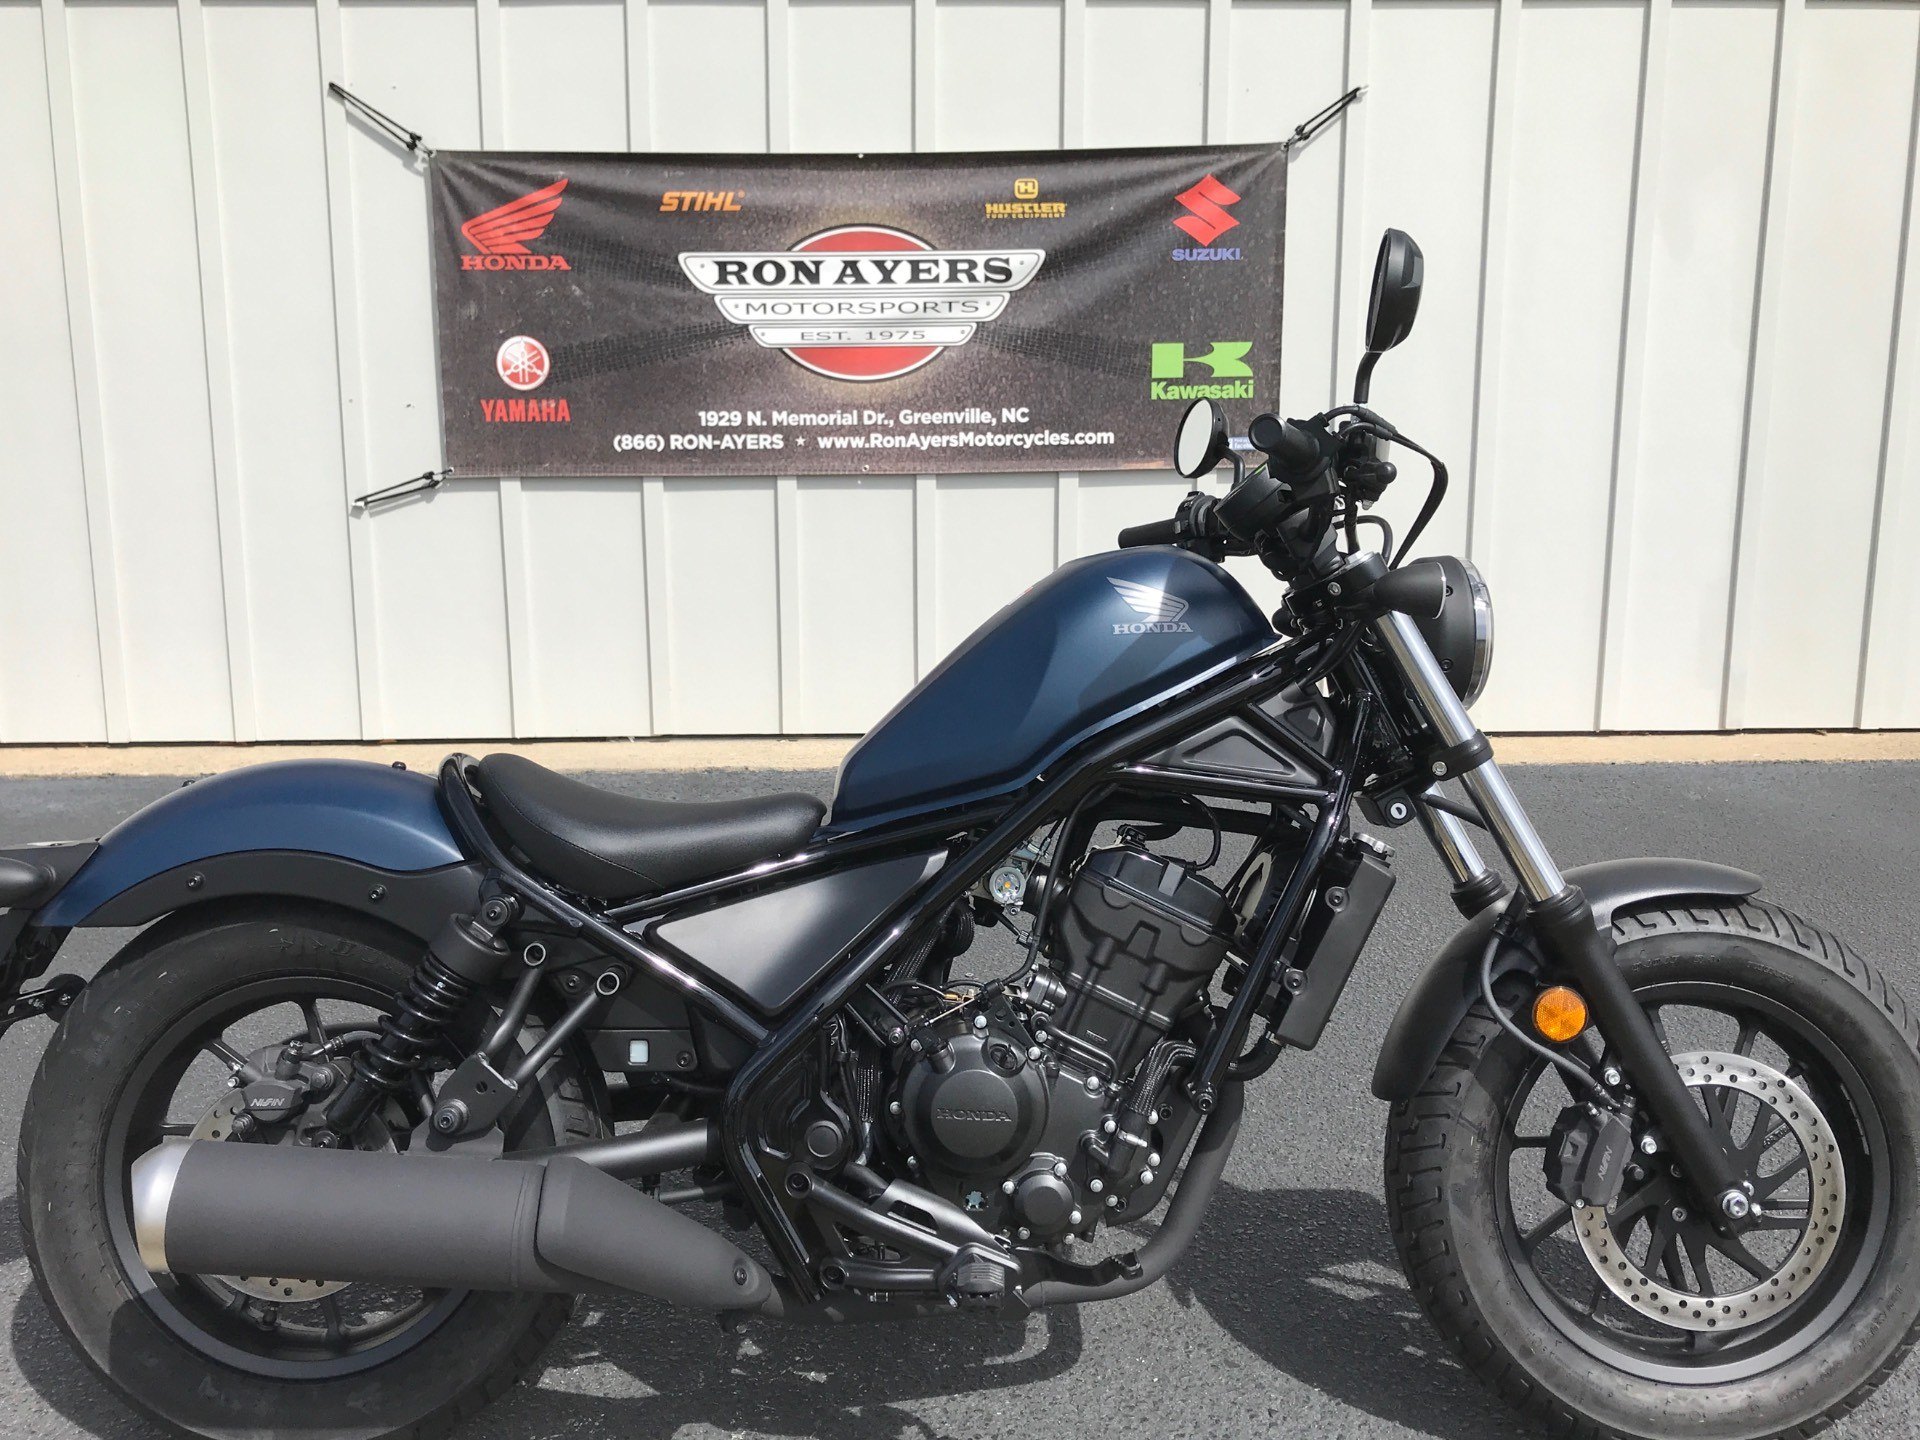 New 2020 Honda Rebel 300 Motorcycles in Greenville, NC | Stock Number: N/A